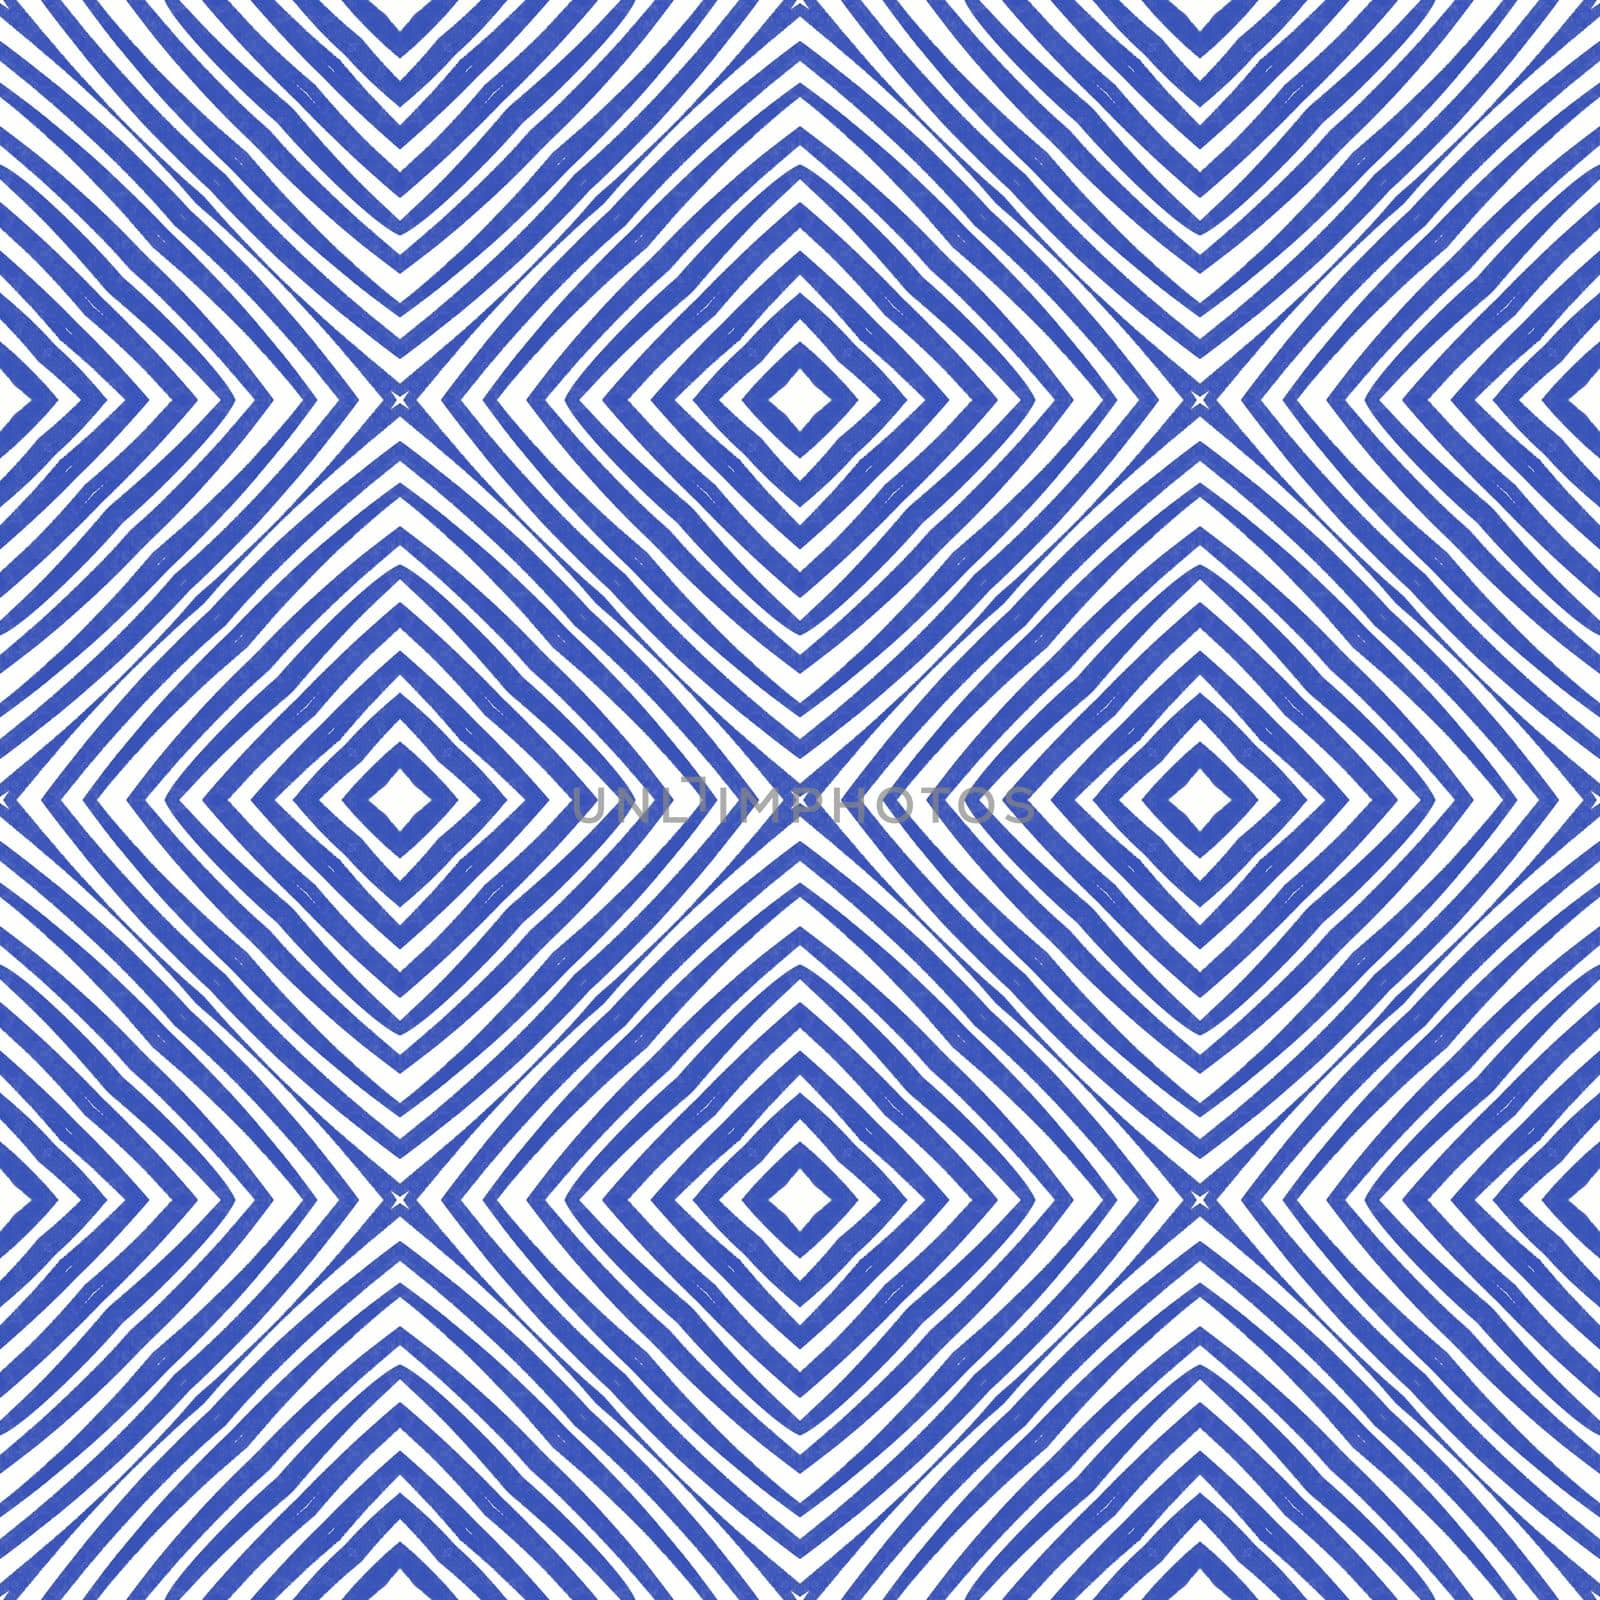 Textured stripes pattern. Indigo symmetrical by beginagain